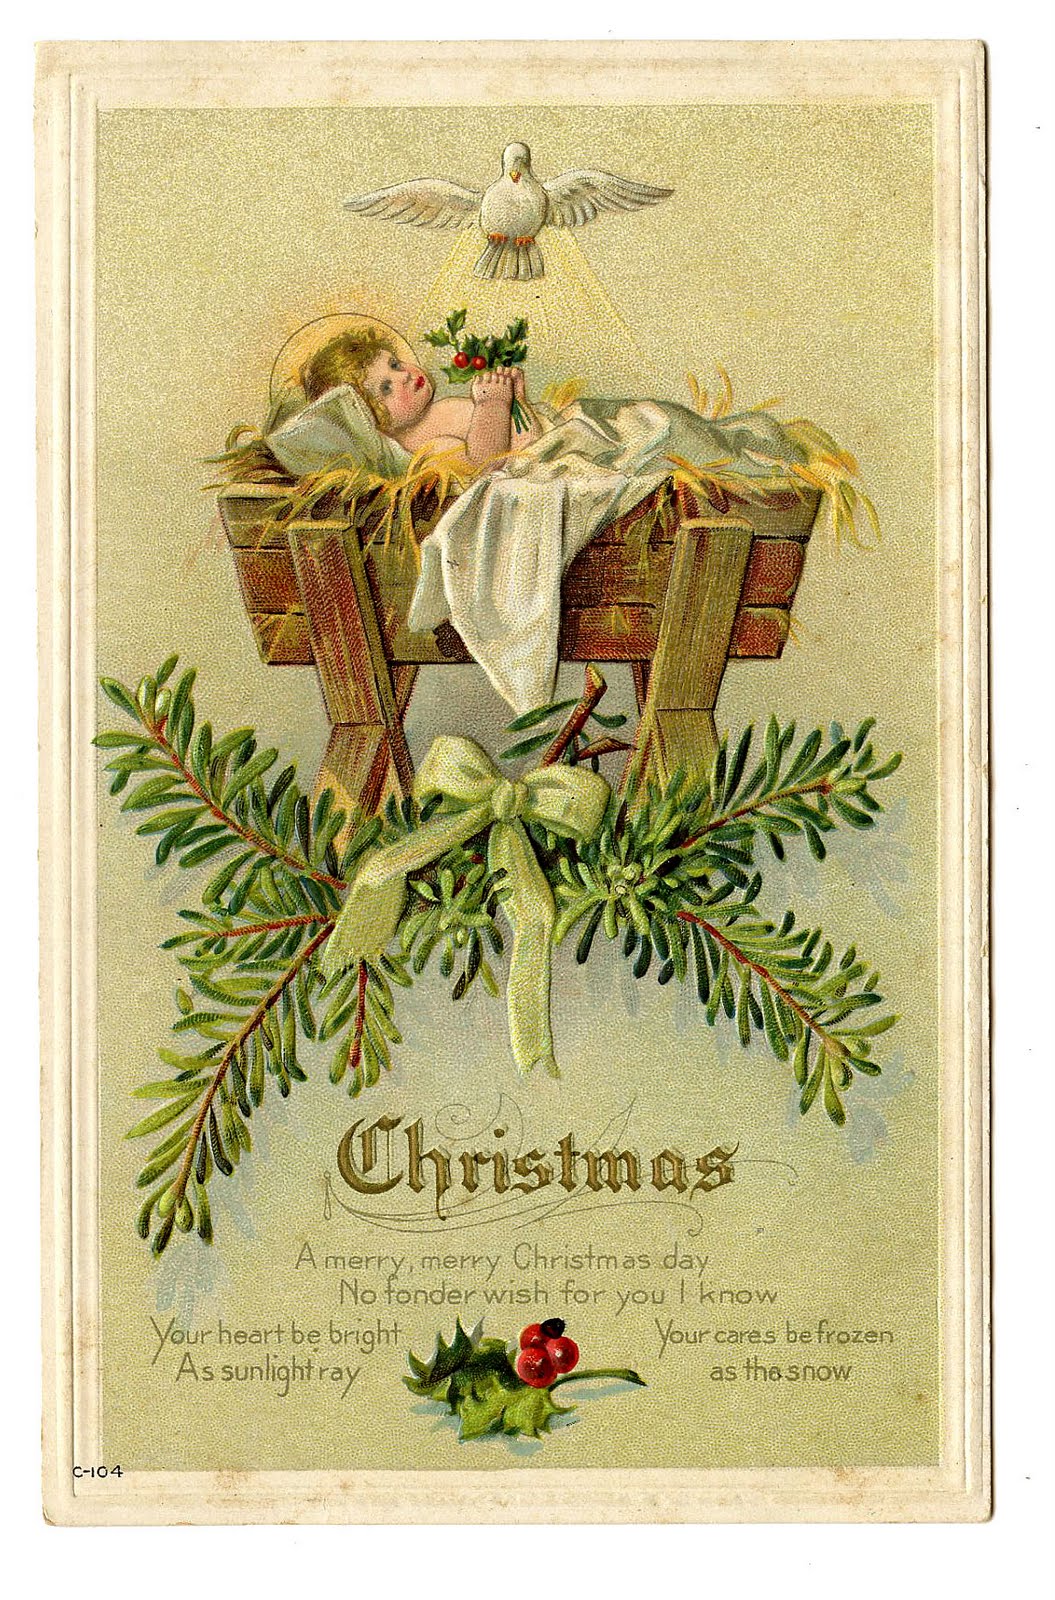 Vintage Christmas Clip Art - Baby Jesus in Manger - The ...